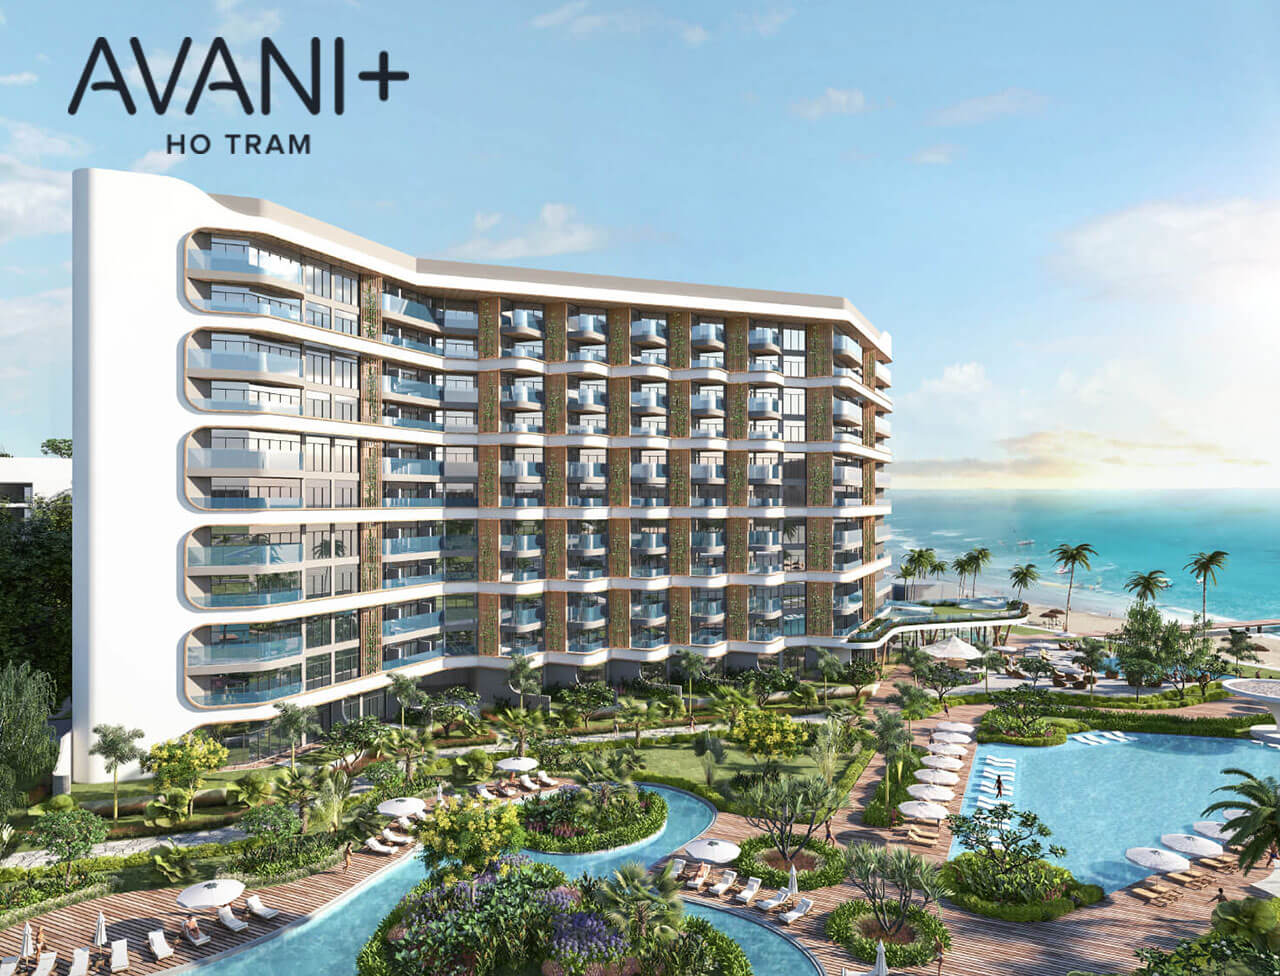 Avani Hotels and Resorts